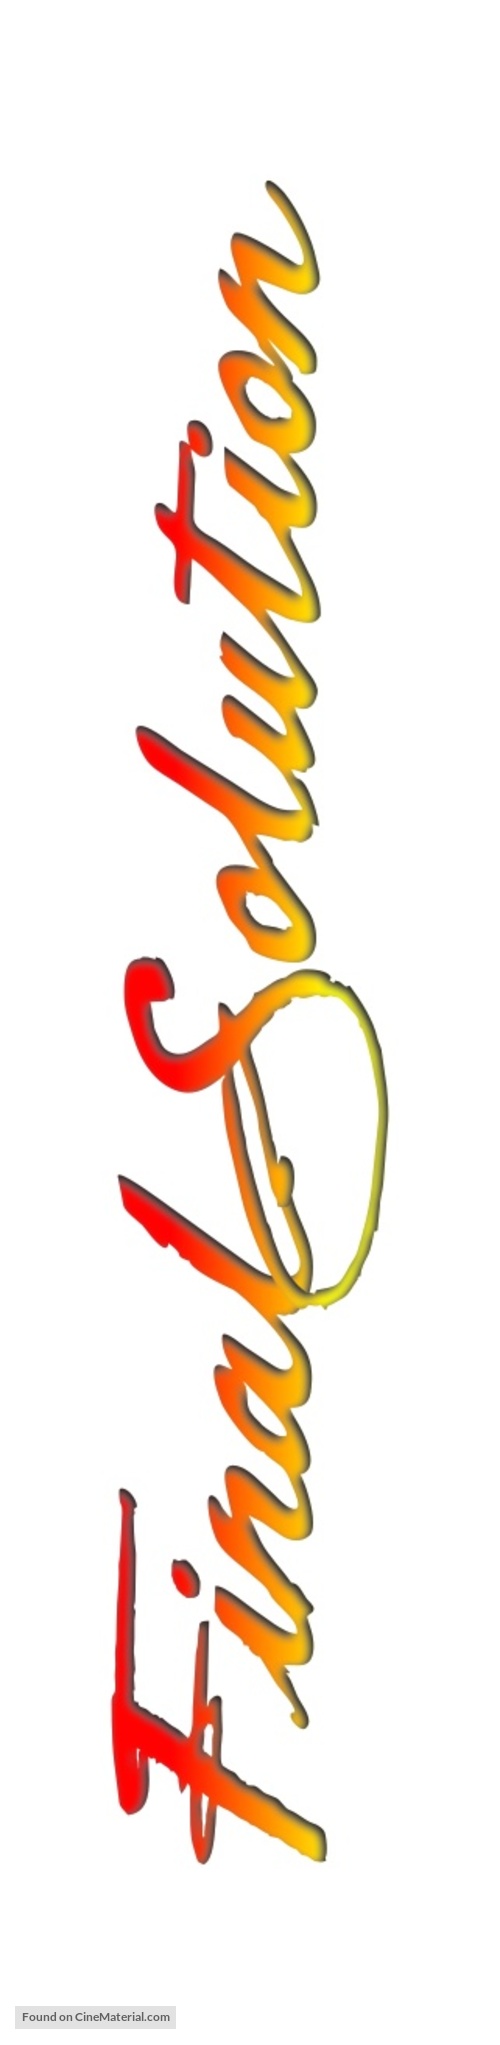 Final Solution - Logo